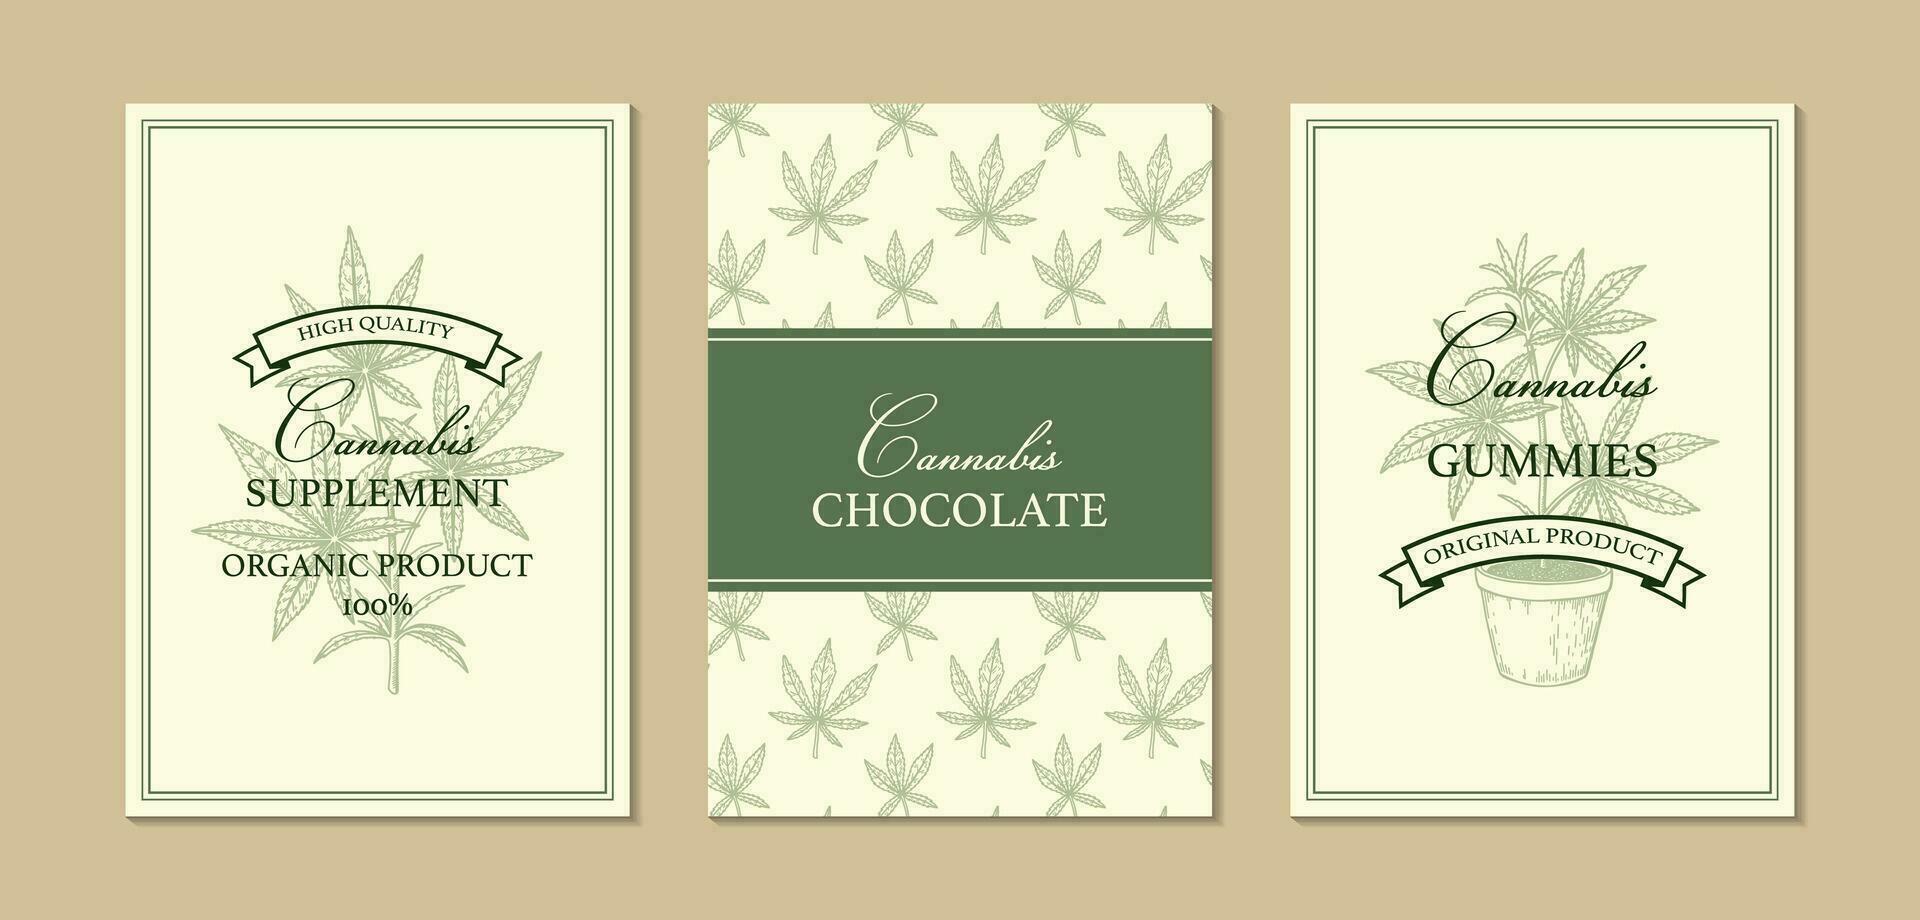 Cannabis vertical design for packaging, social media posts, store decoration, branding, certificates. Marijuana vector illustration in sketch style. Hemp engraved background